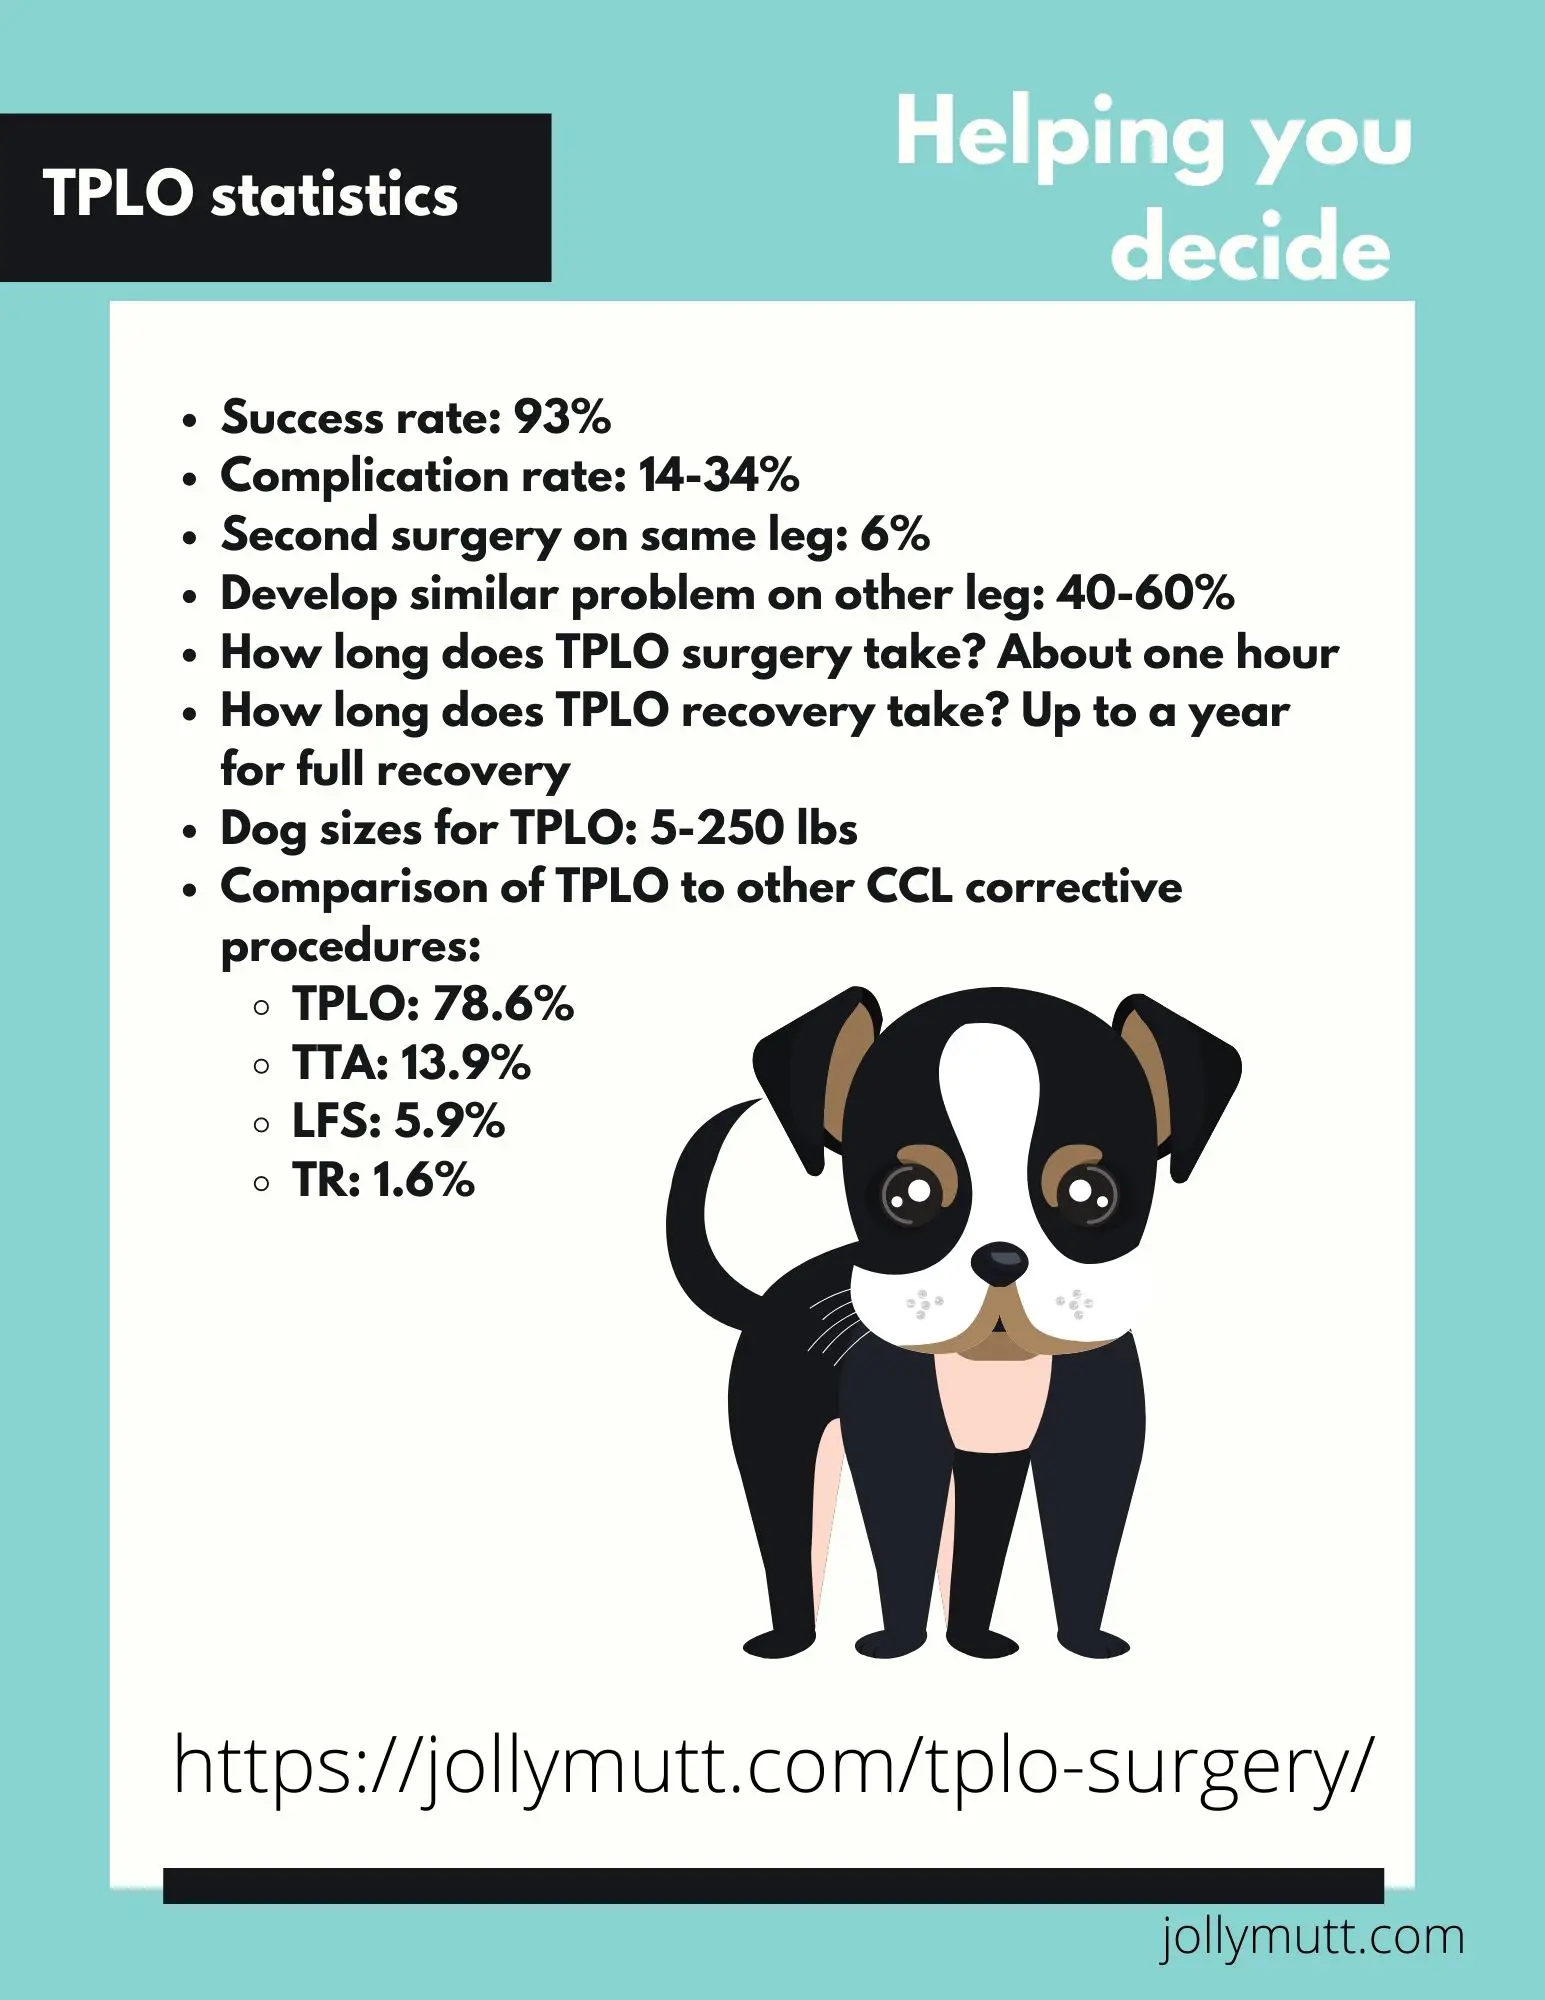 TPLO surgery statistics